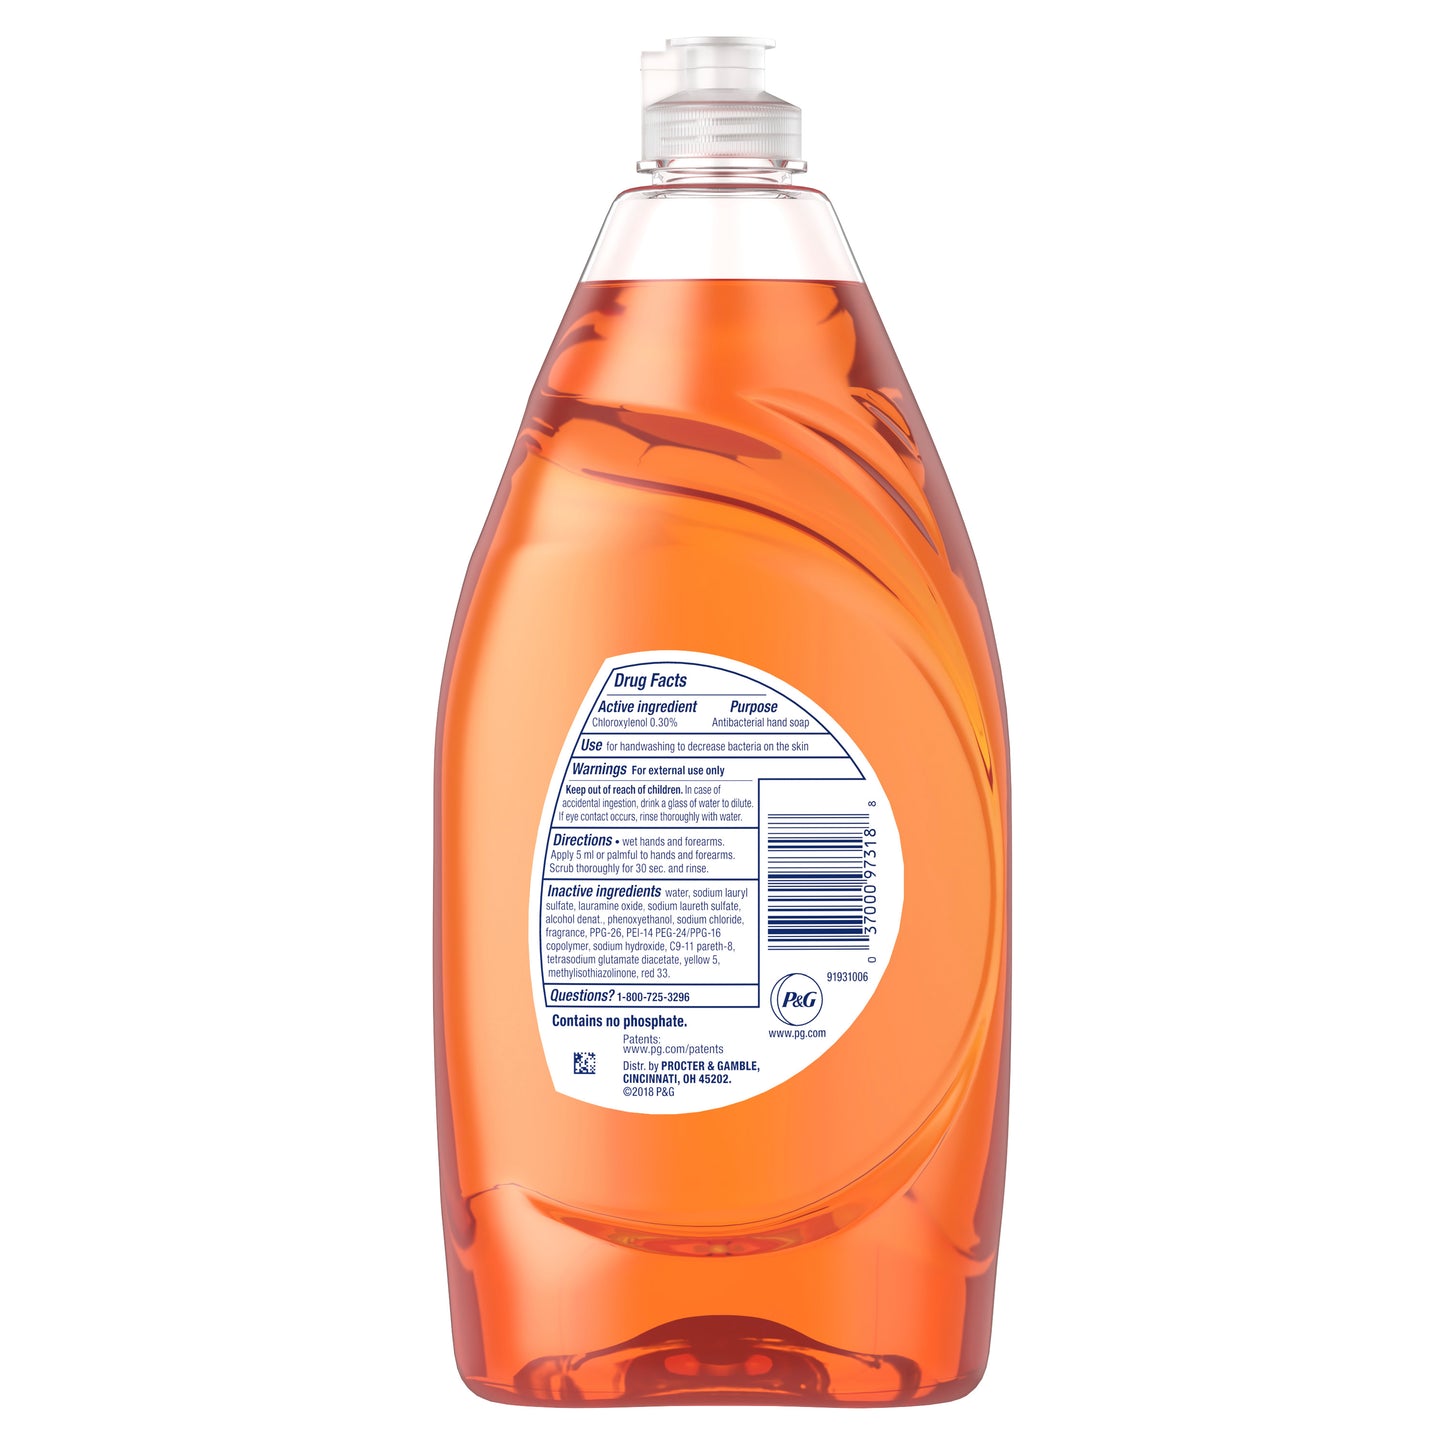 Dawn Ultra Antibacterial Liquid Dish Soap, Orange Scent, 28 fl oz